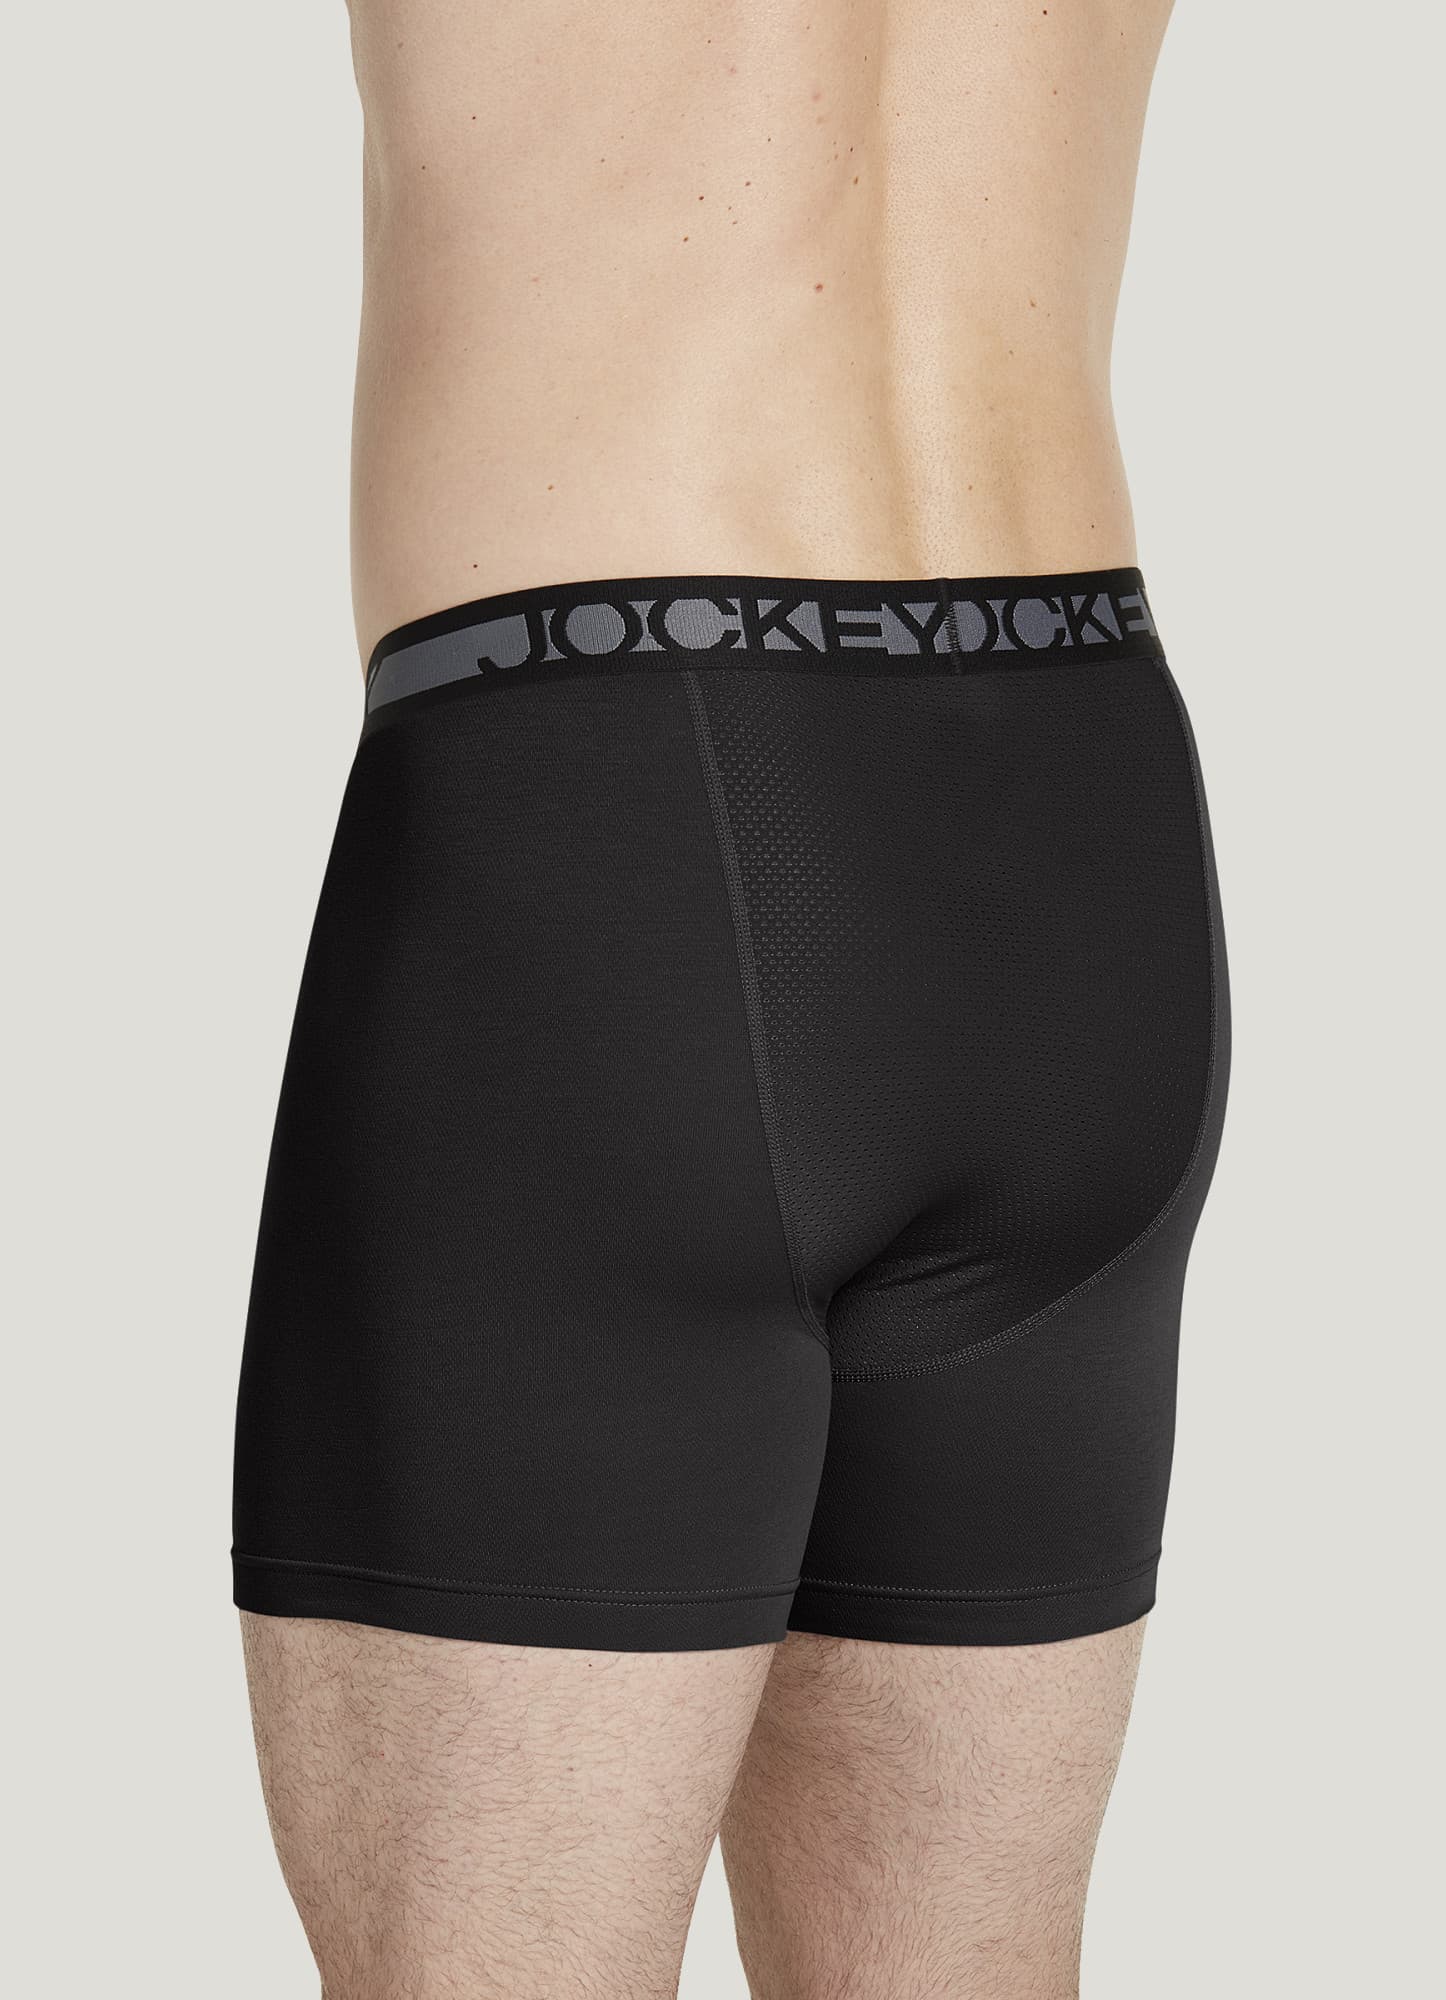 6PCS CMM Men's Mesh Quick Dry Boxer Brief Short Underwear